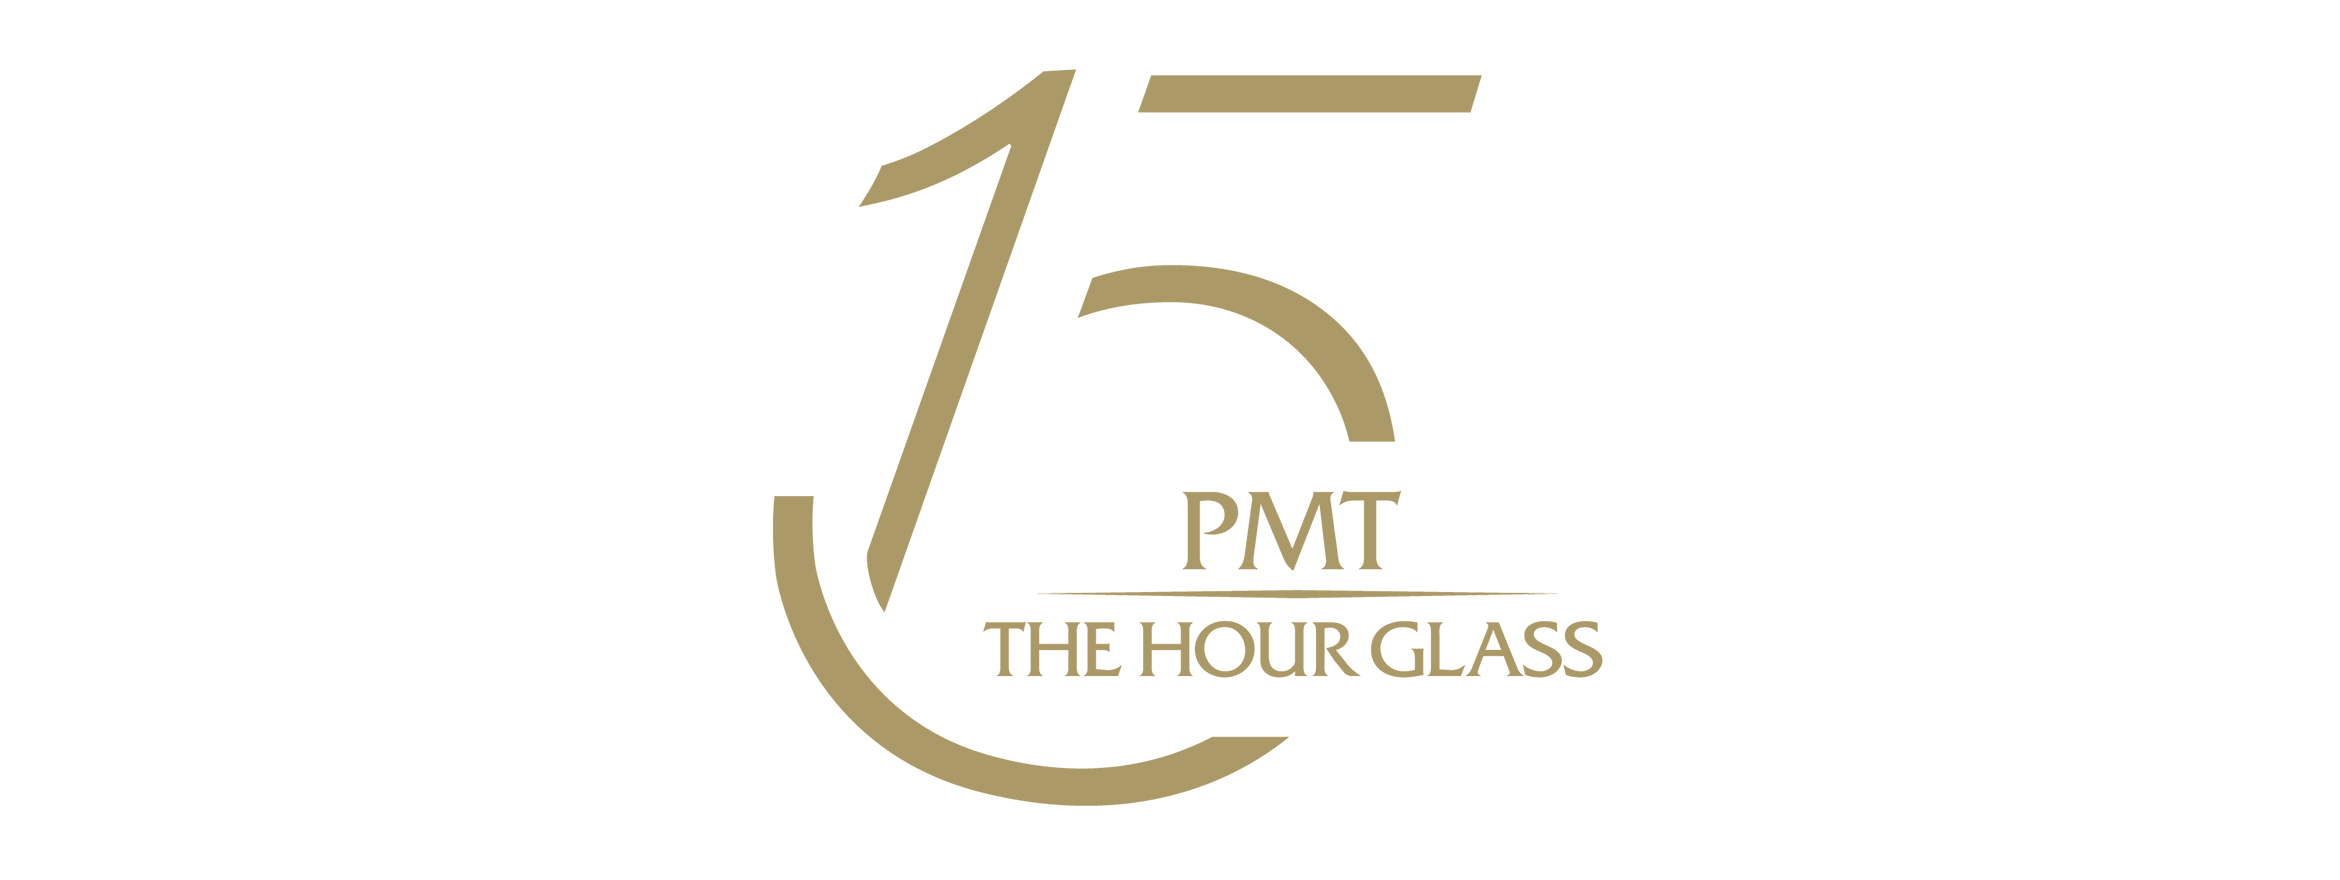 PMT The Hour Glass เฉลิมฉลอง 15 ปีแห่งความร่วมมือทางธุรกิจ